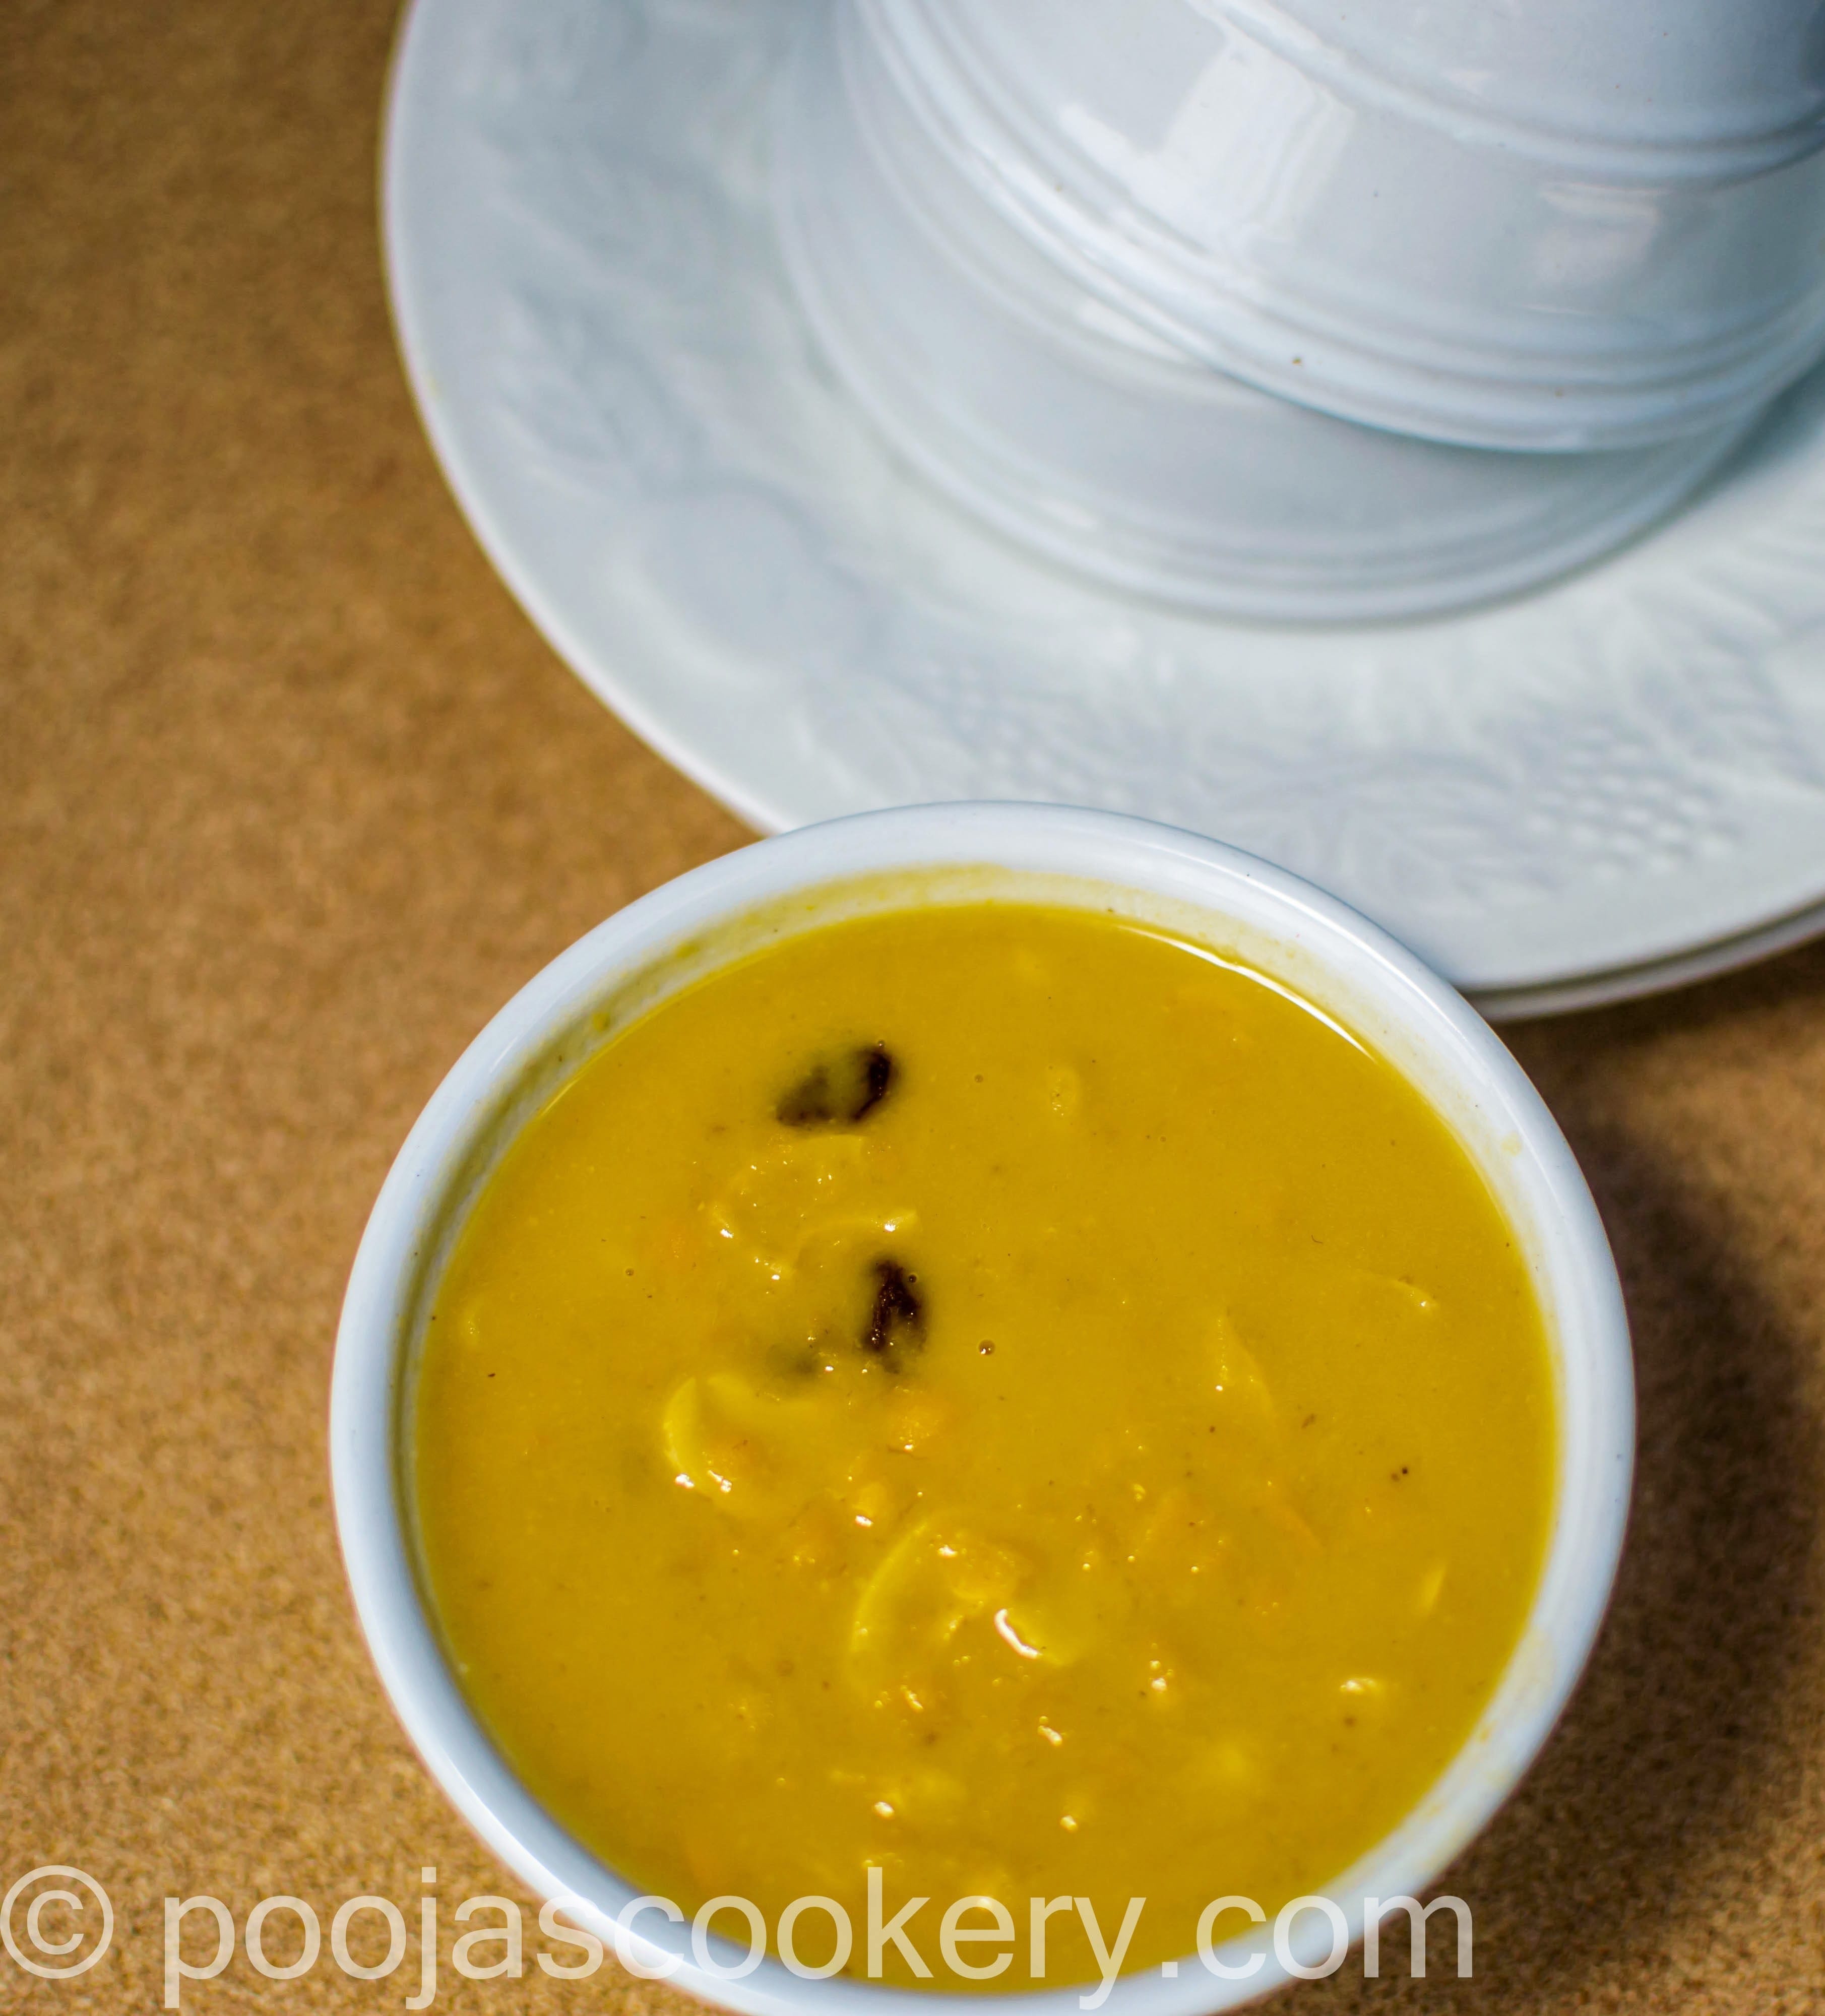 Mangane(Goan Sweet) / Chana Dal Kheer/ Split Gram Porridge| poojascookery.com